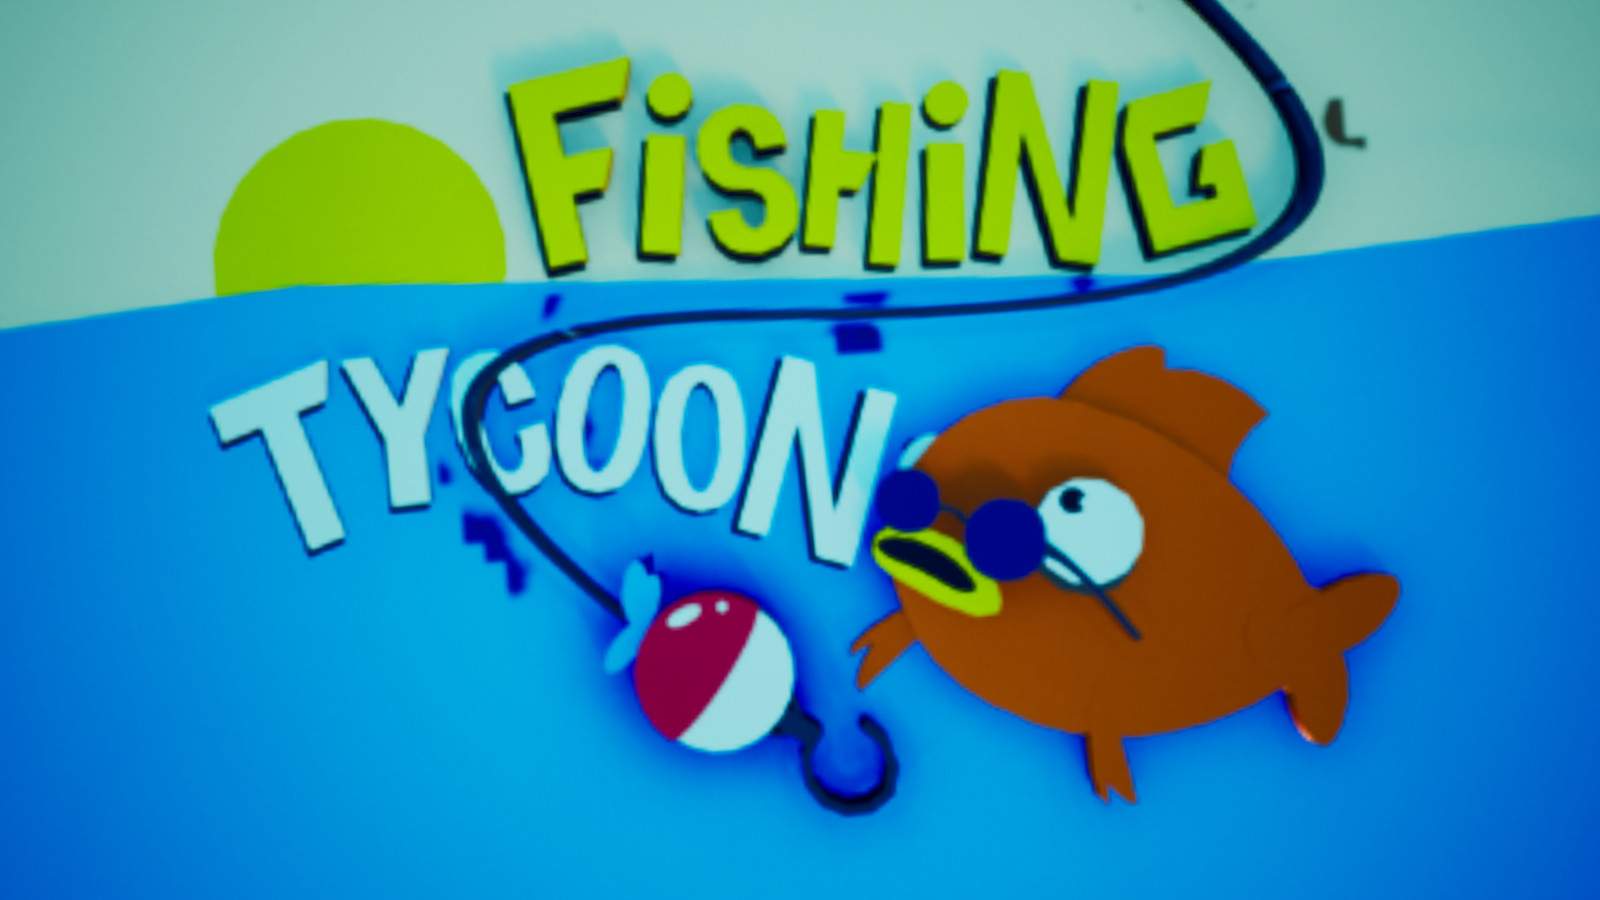 FISHING TYCOON